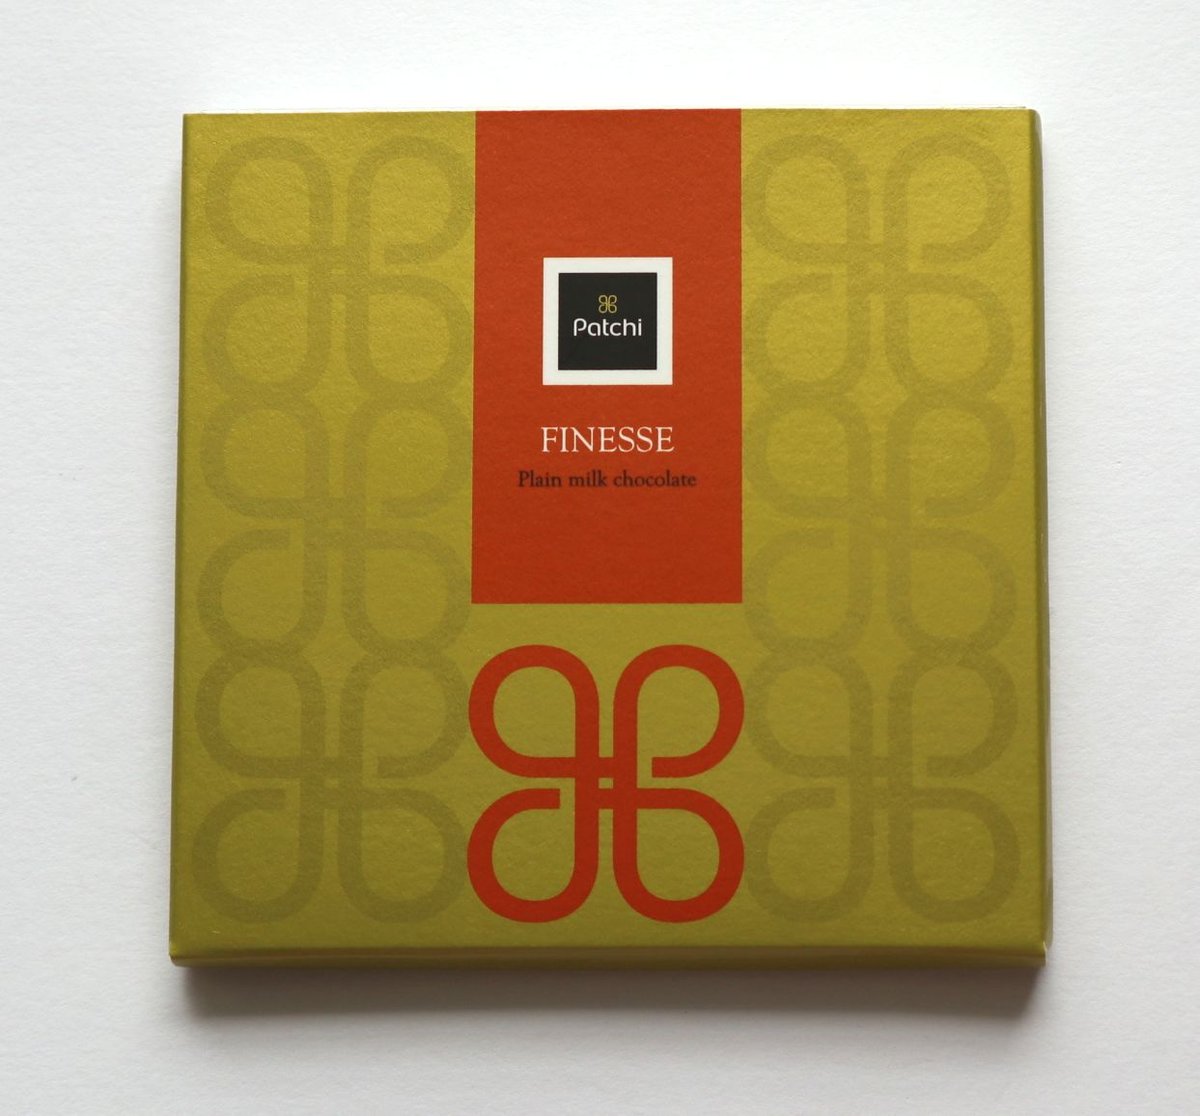 Patchi 高級チョコレート詰め合わせ 500g×2箱 - www.sorbillomenu.com